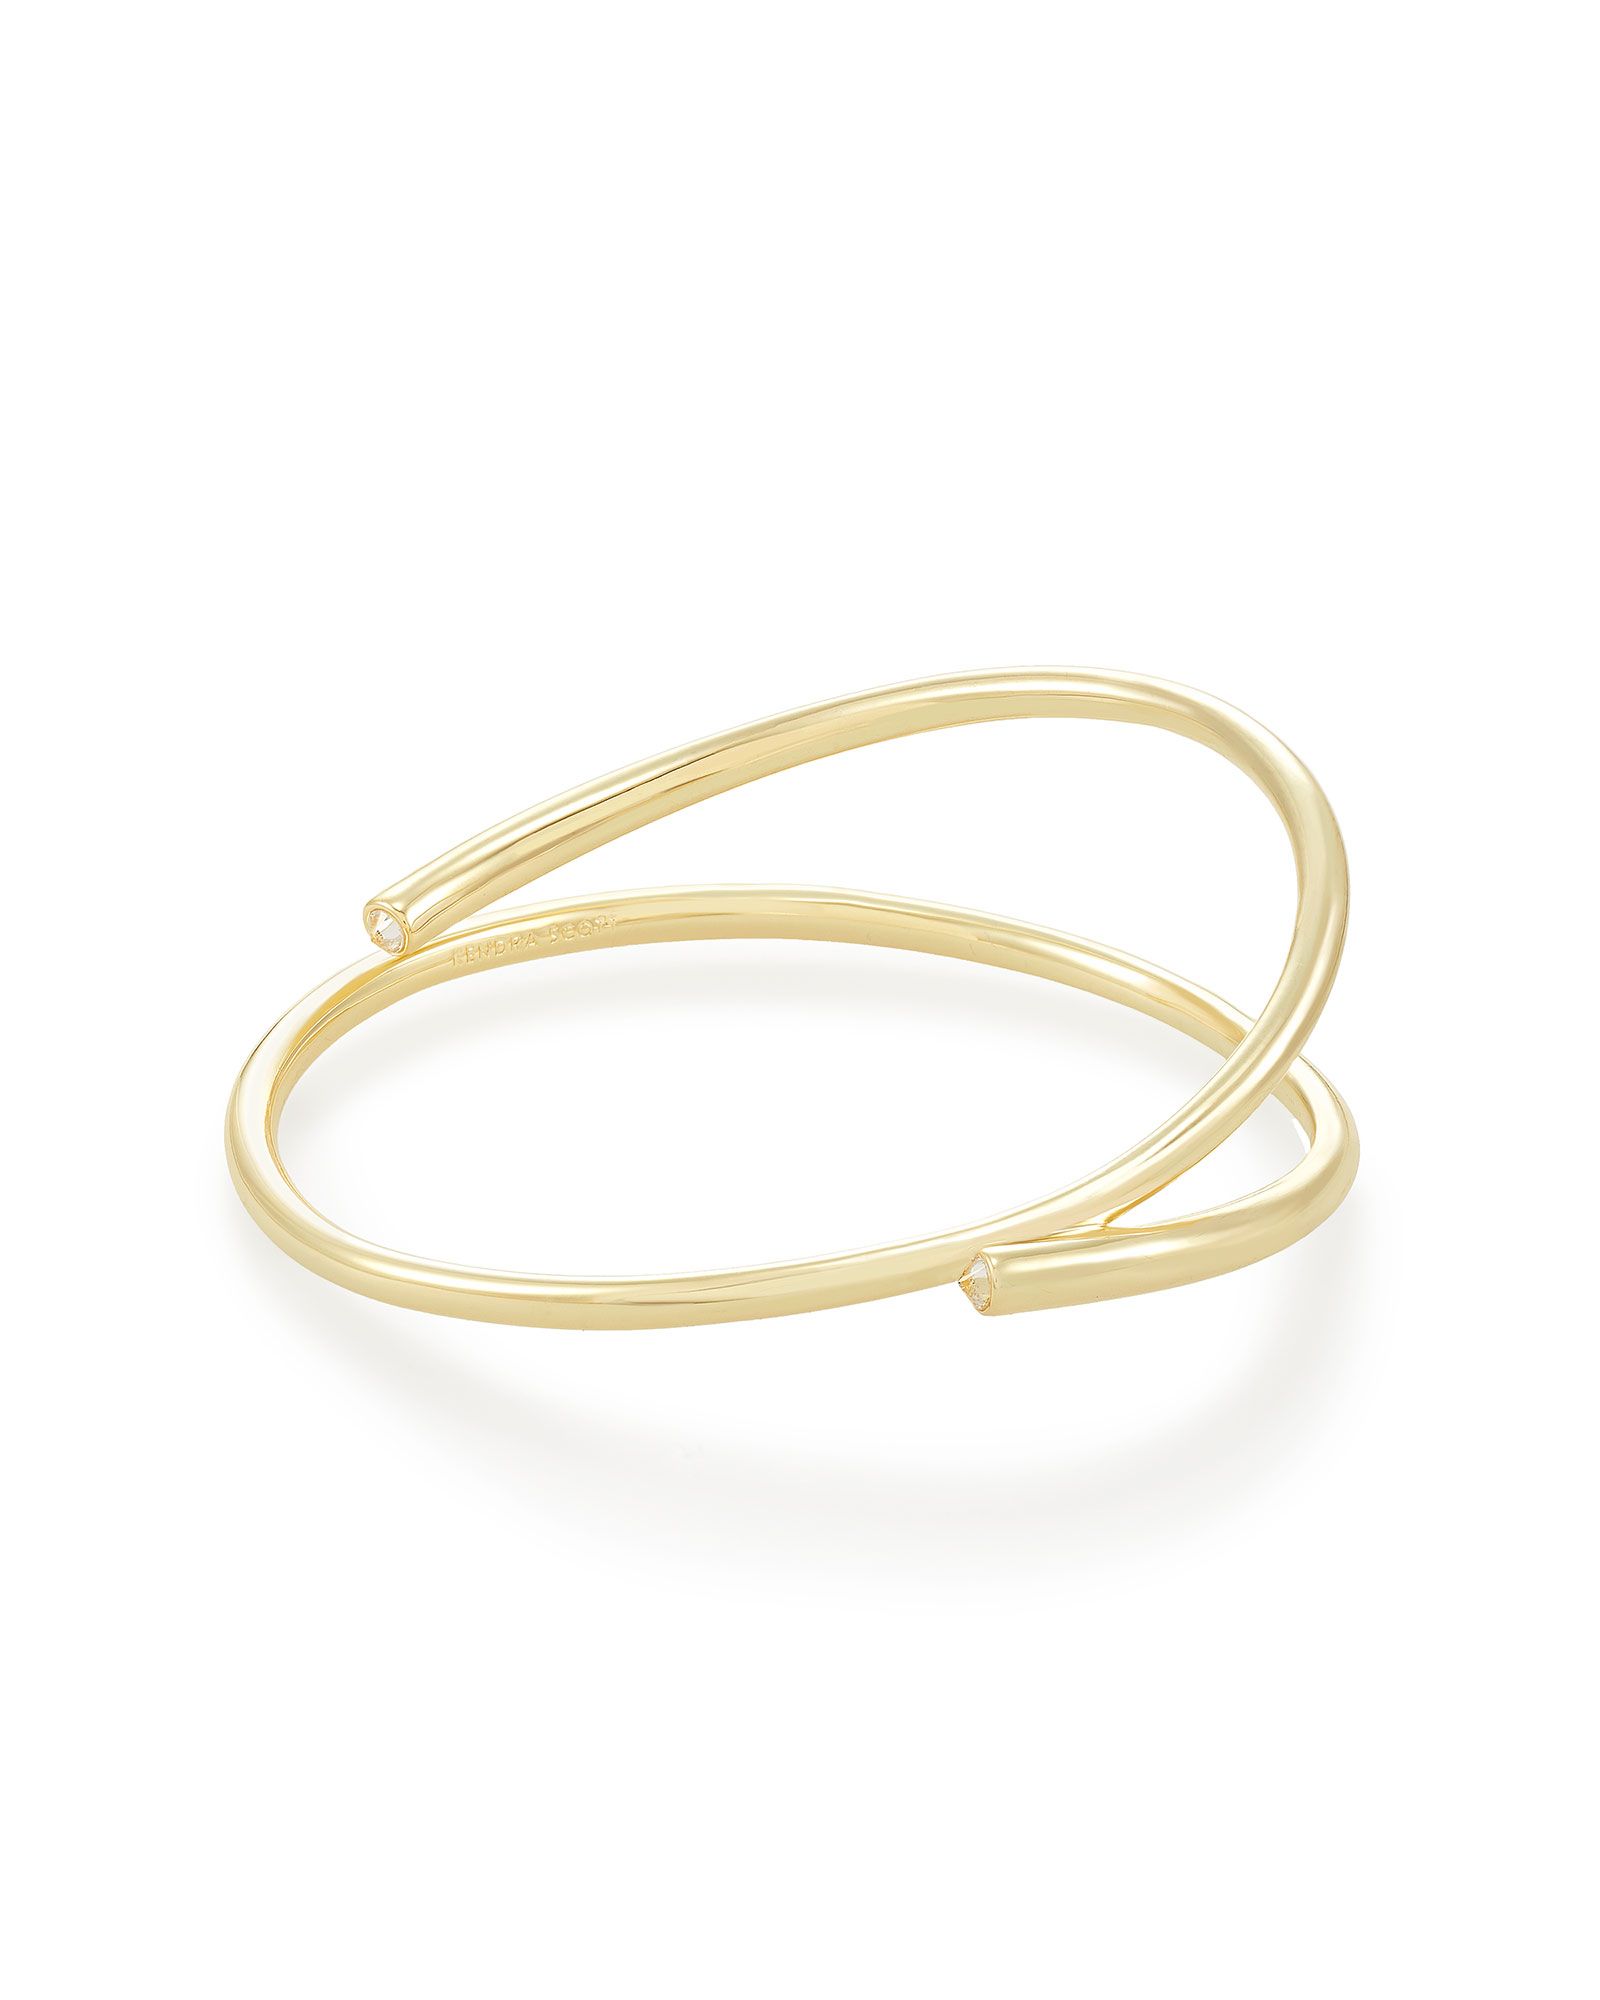 Myles Bangle Bracelet in Gold | Kendra Scott